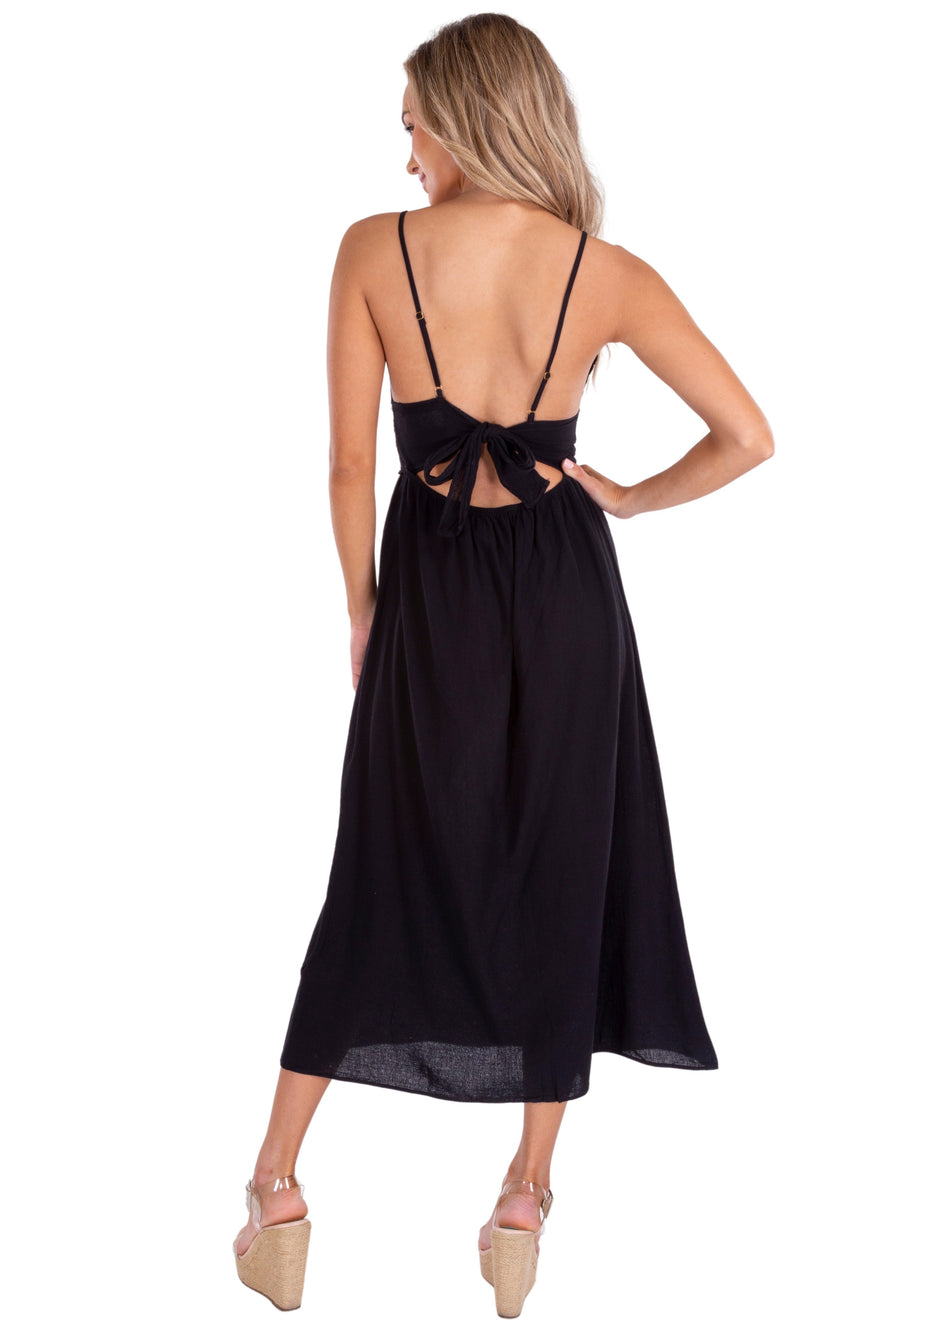 NW1520 - Black Cotton Dress